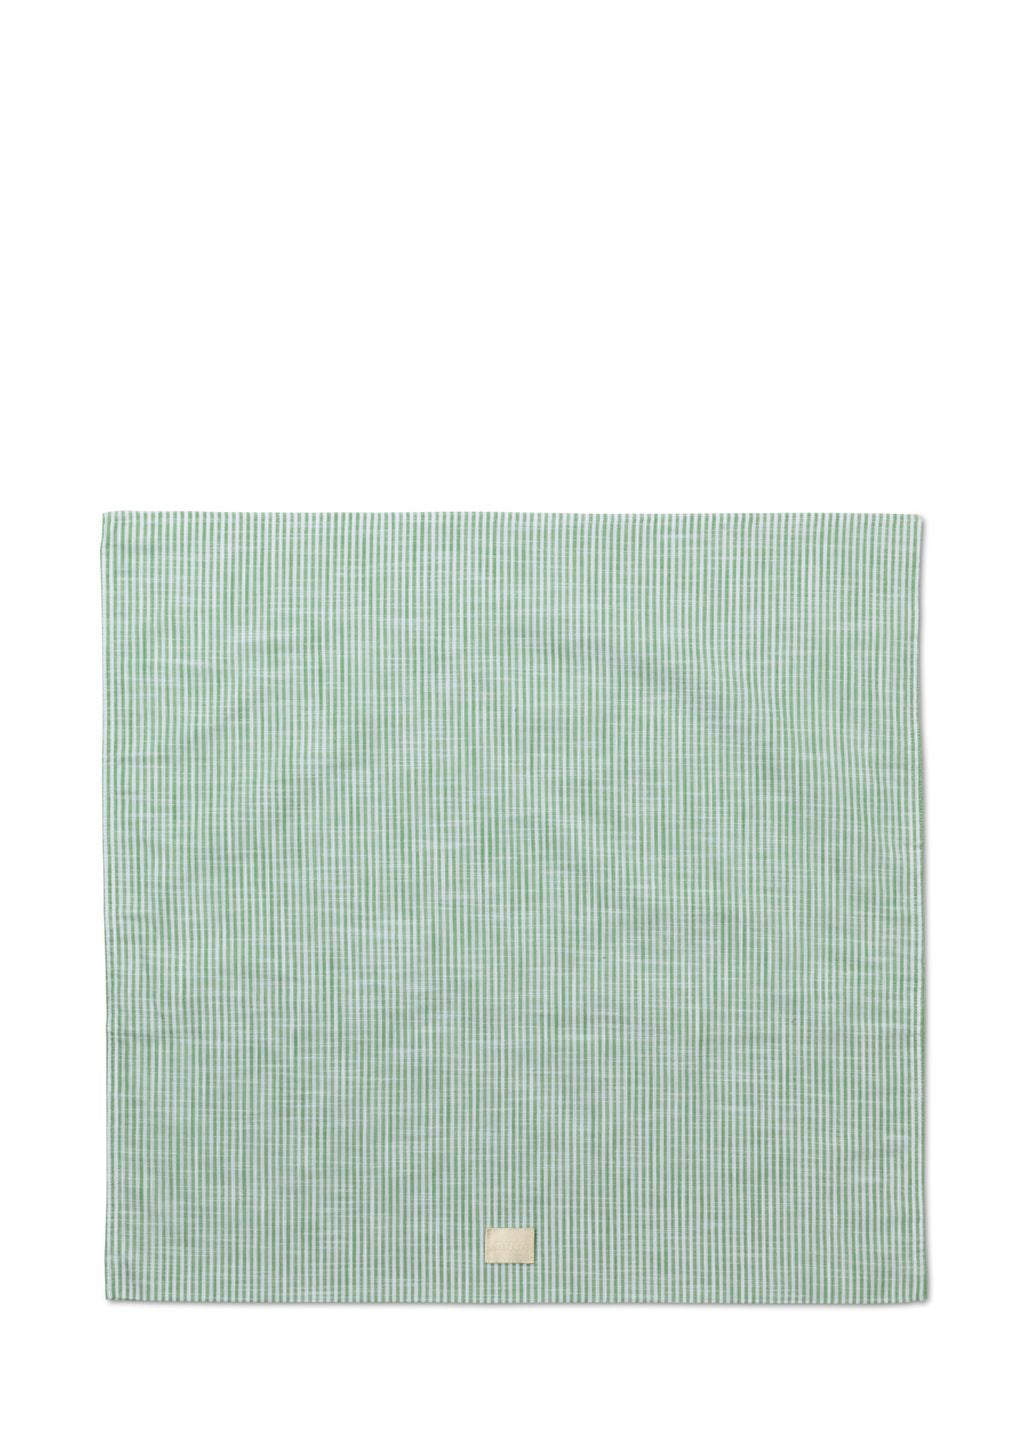 JUNA Monochrome Lines örngott 63x60 cm, grönt/vitt